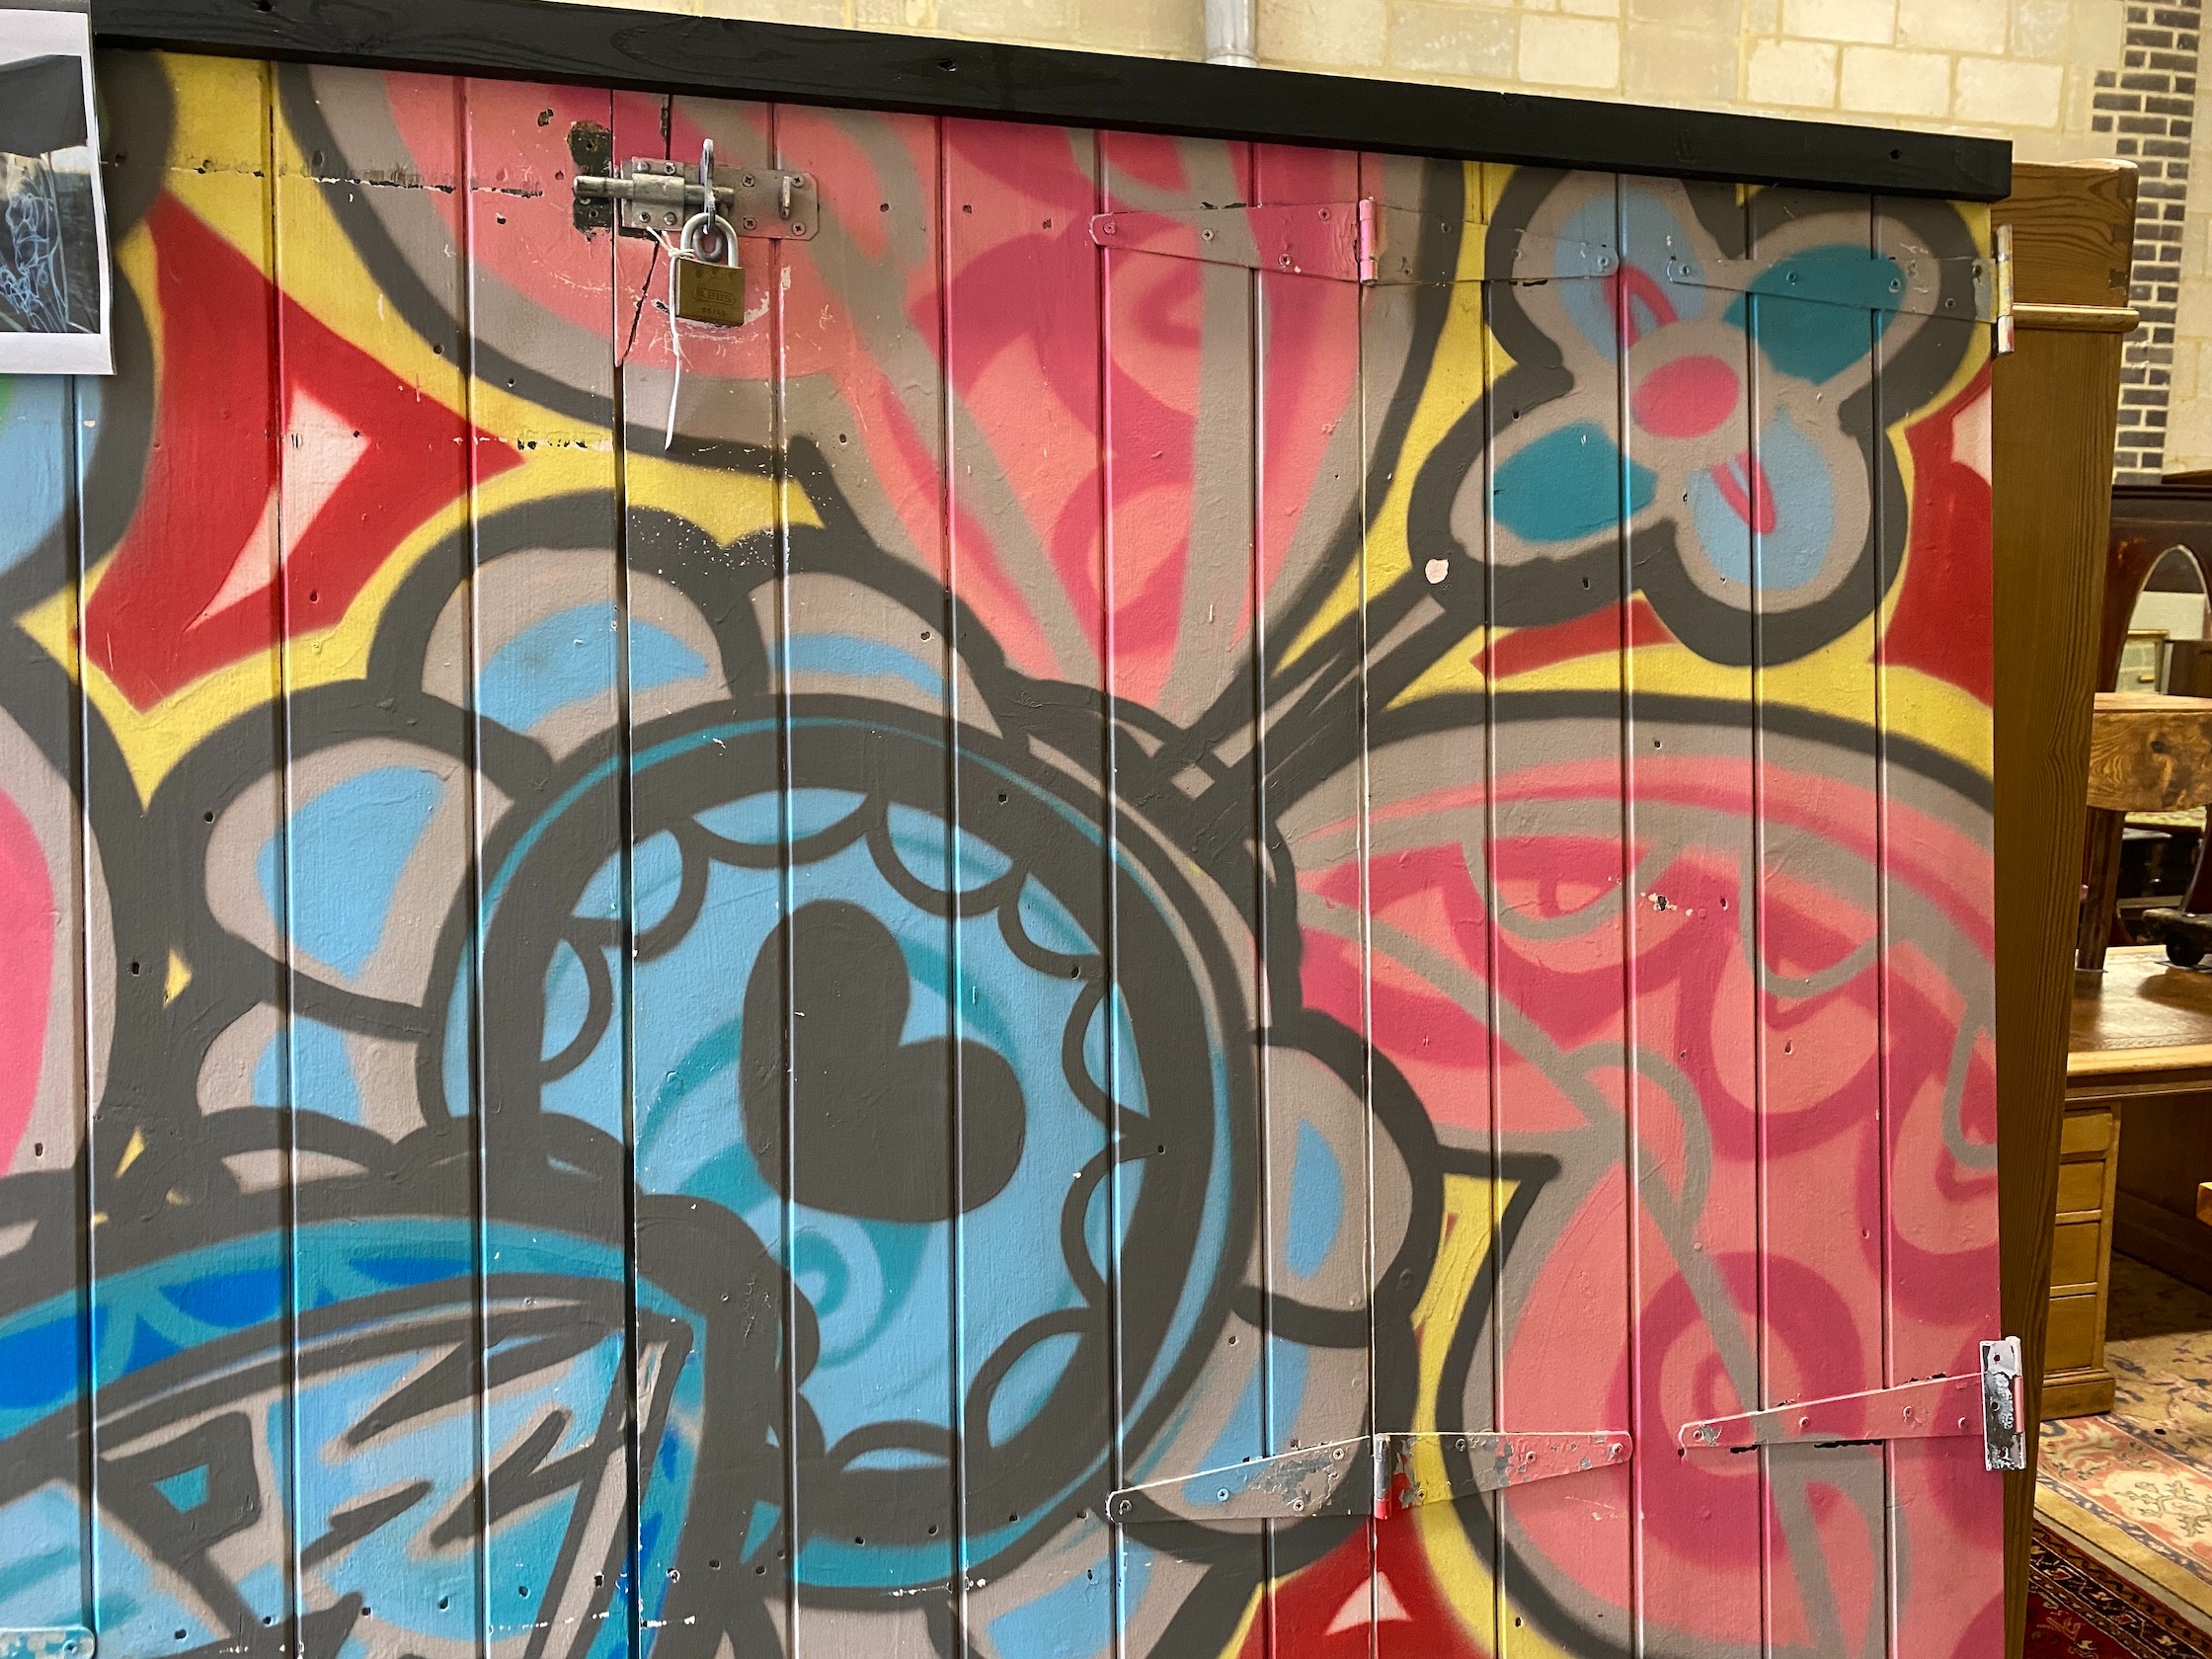 A wooden door from Camden Market with painted graffiti art width 216cm, height 207cm